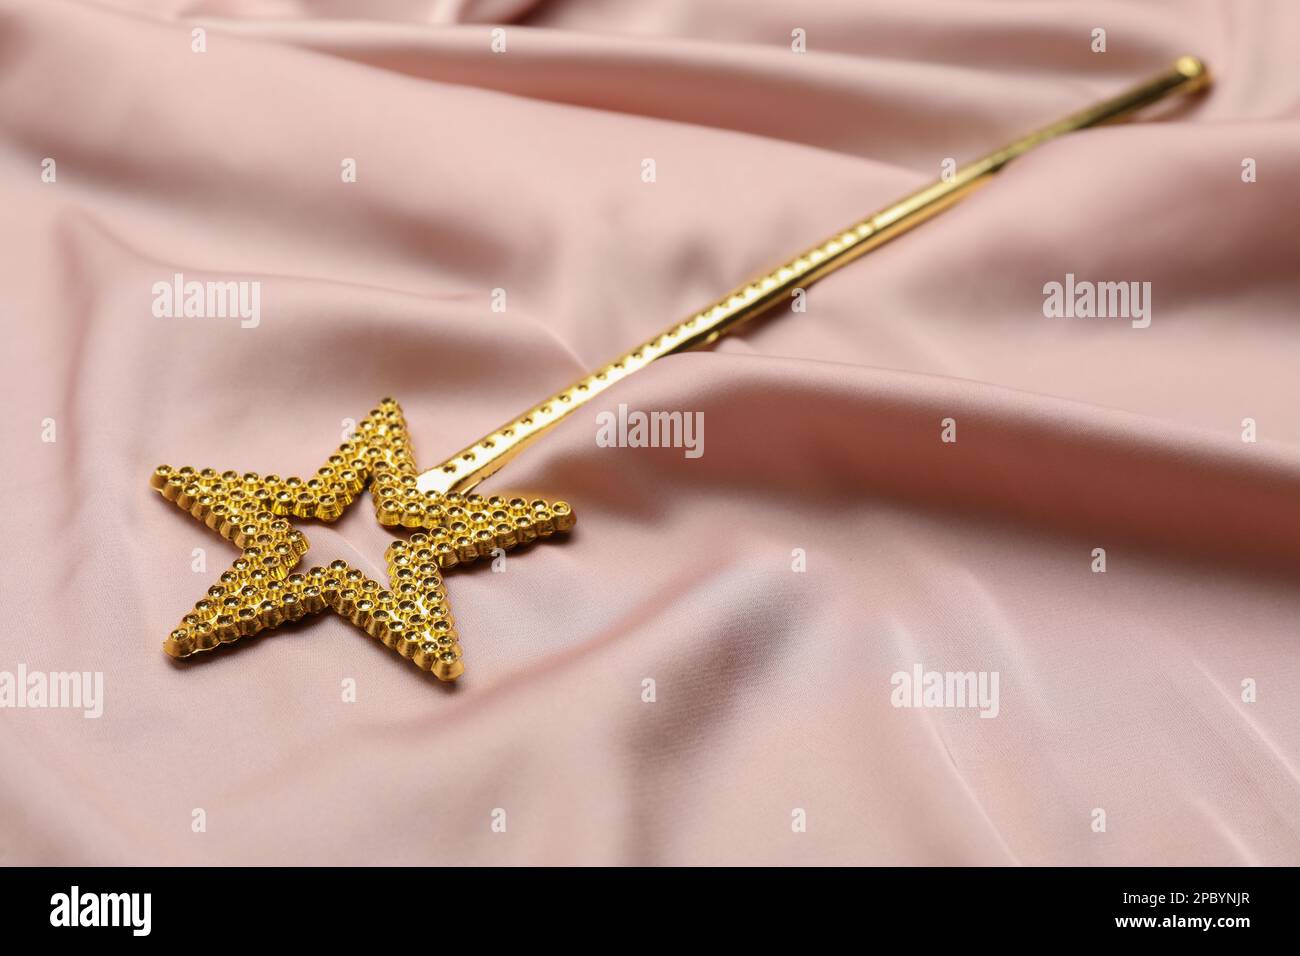 Beautiful golden magic wand on pink fabric Stock Photo